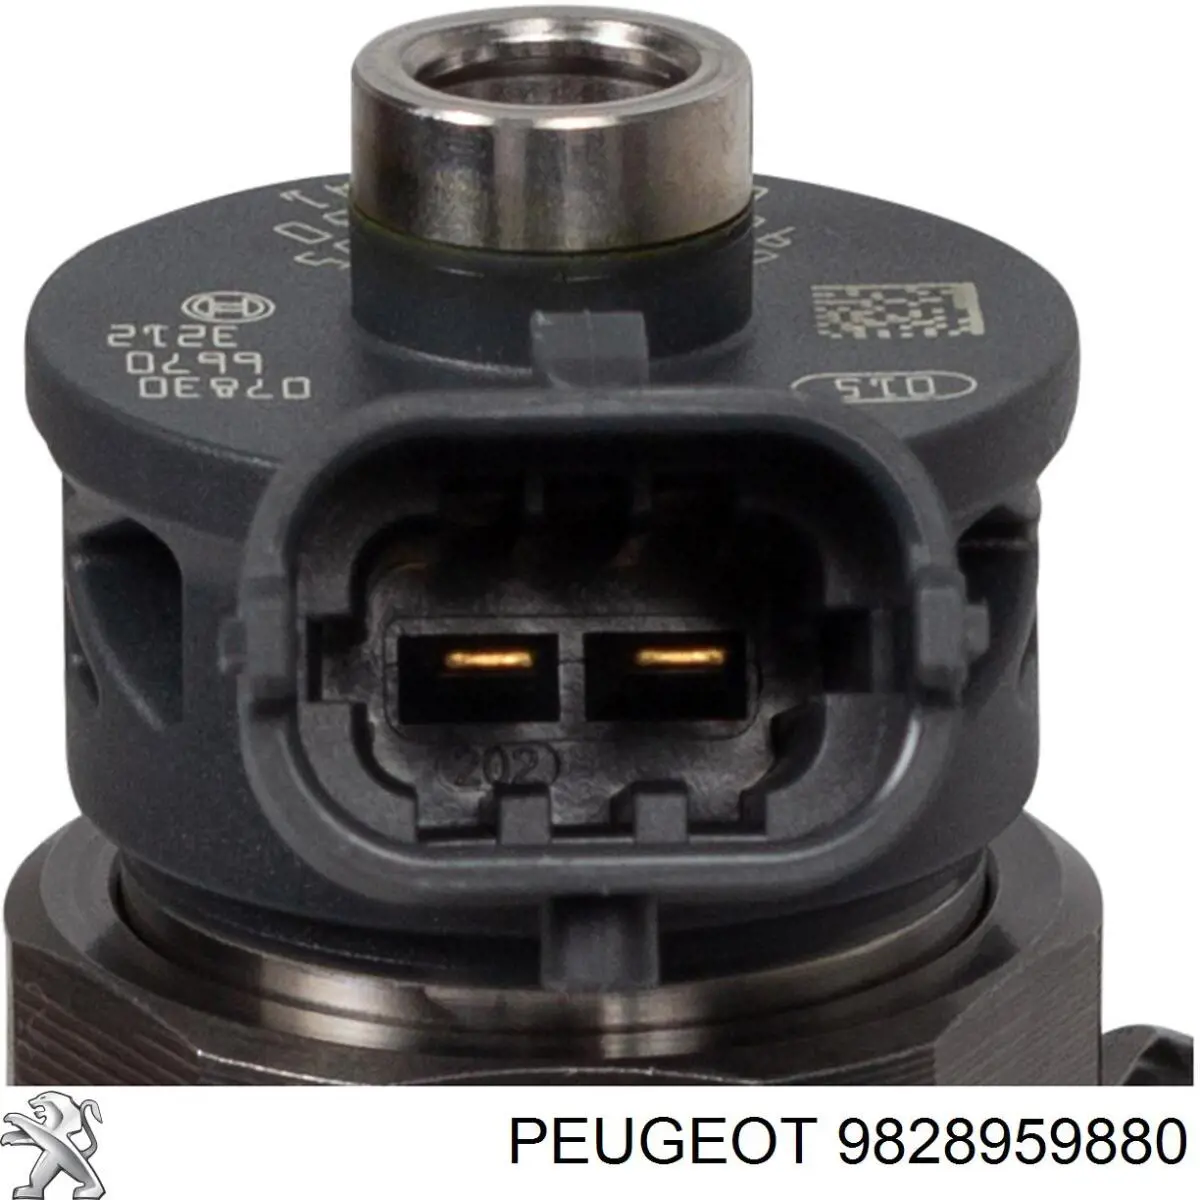 9828959880 Peugeot/Citroen inyector